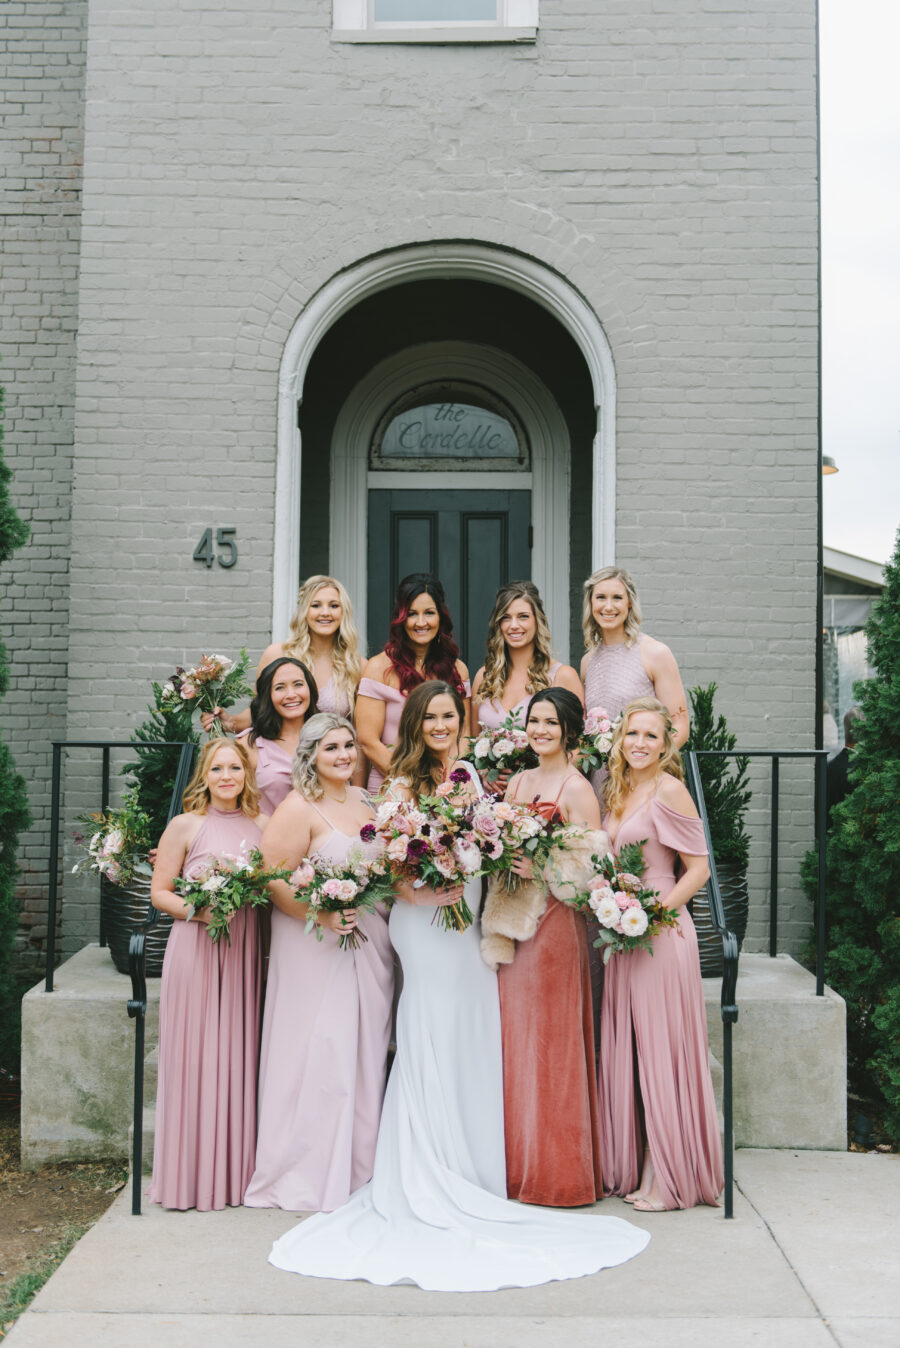 Shades of Pink Bridesmaid Dresses | Nashville Bride Guide